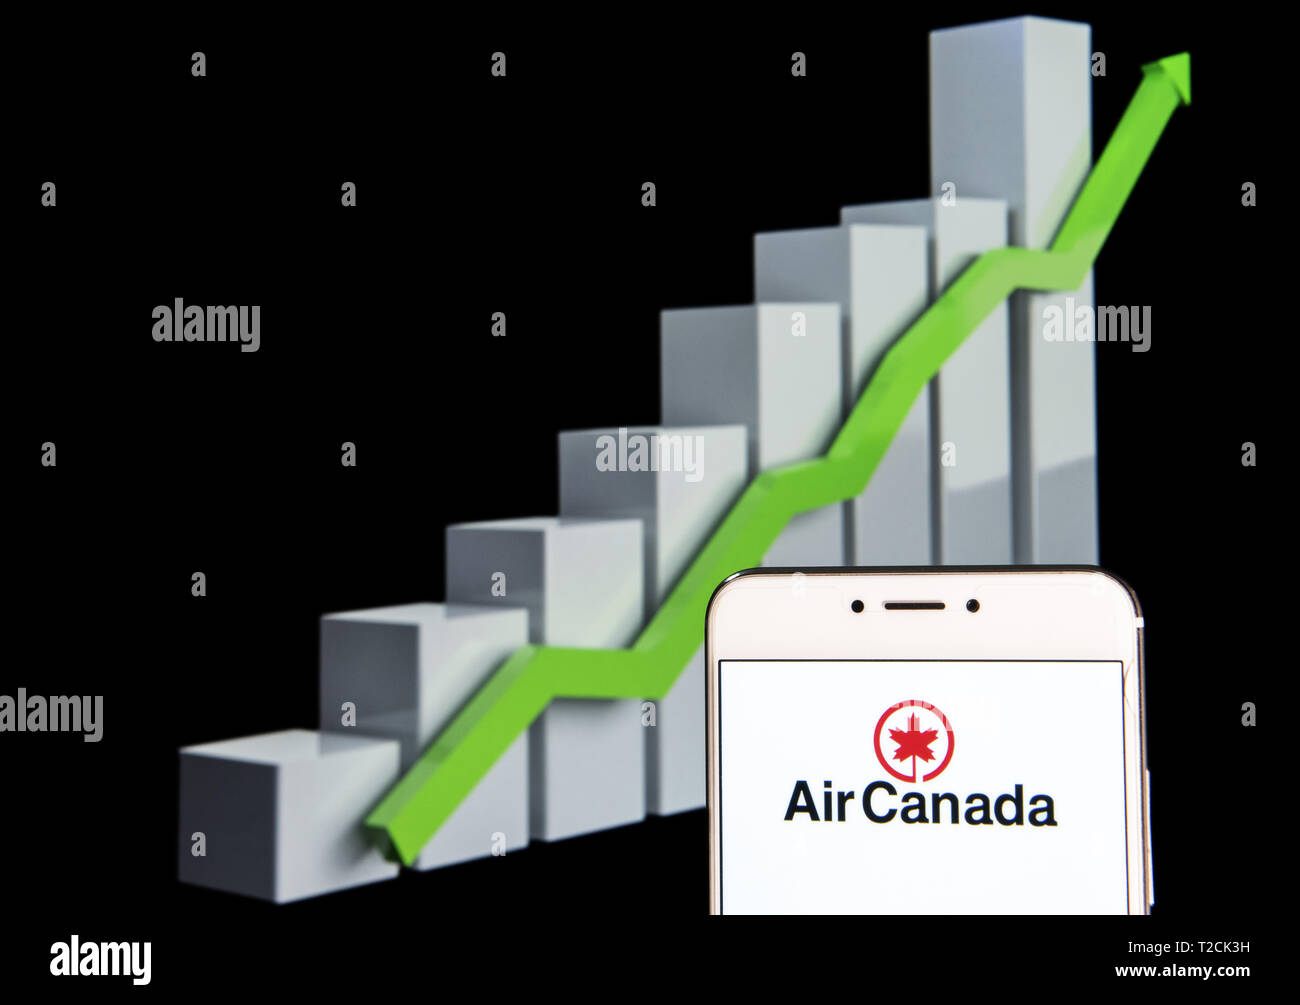 Air Canada Stock Chart